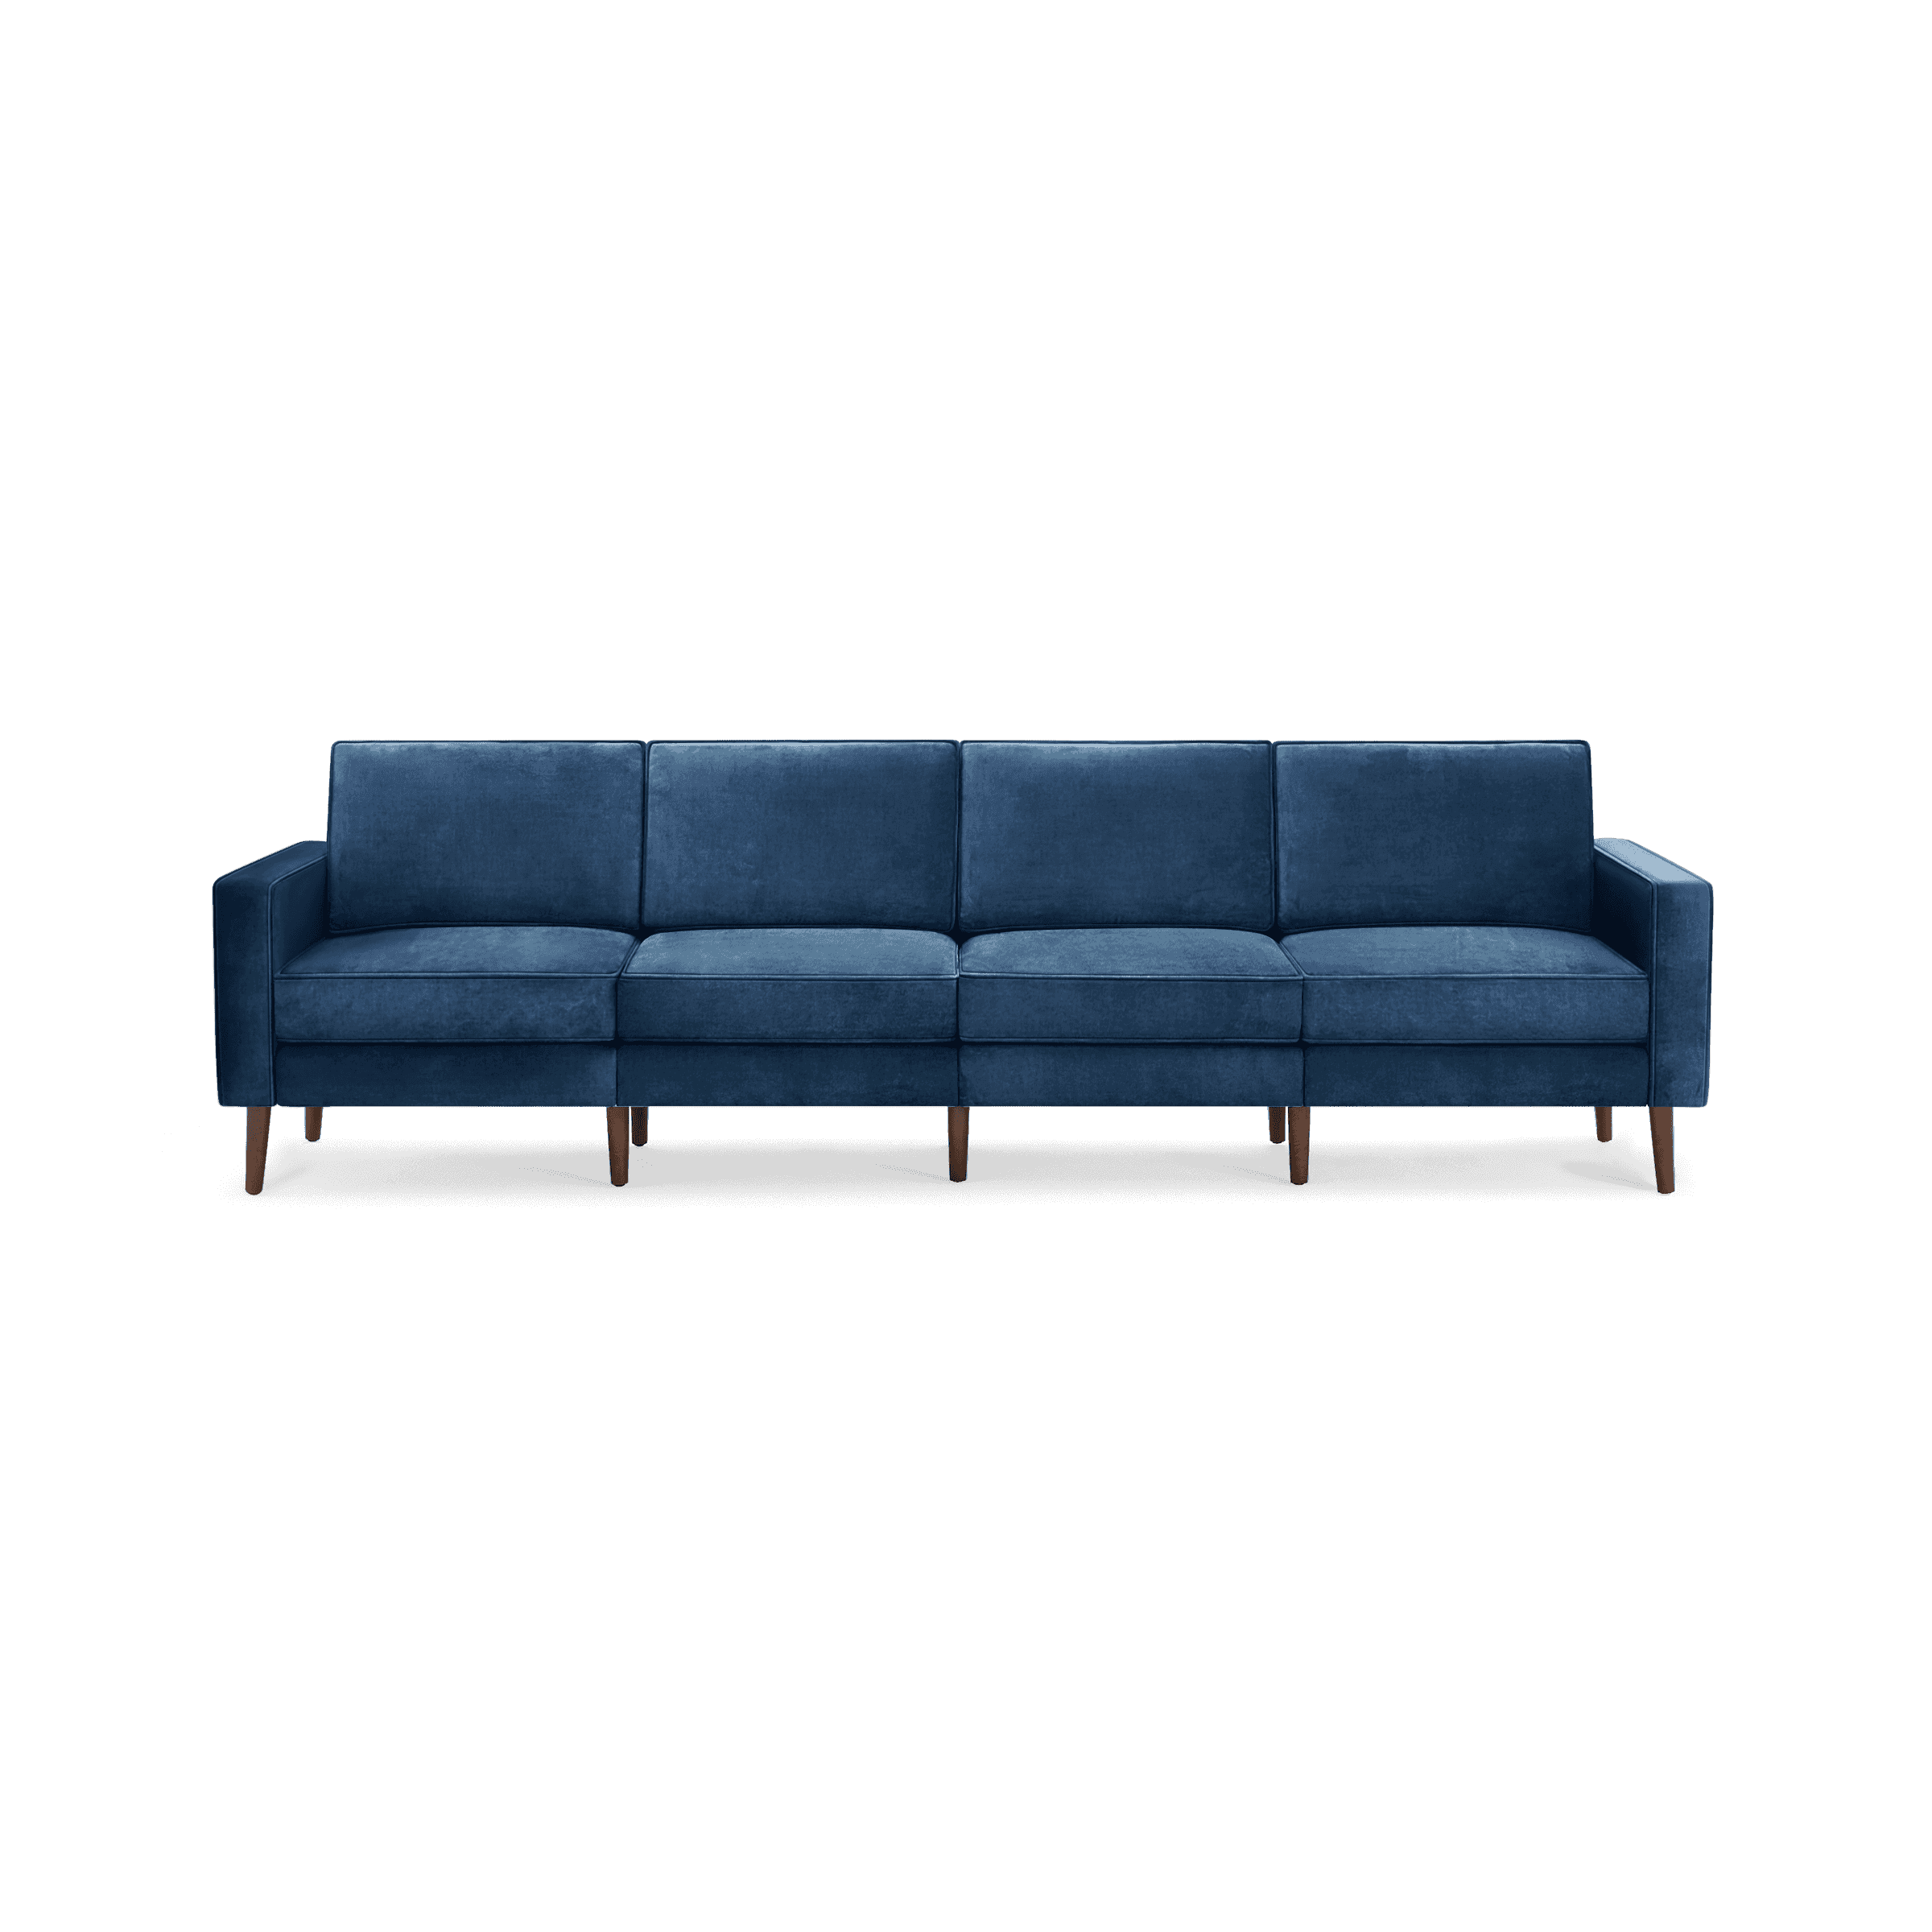 Burrow Modular Nomad Velvet King Sofa in Midnight, Walnut Legs | 35" L x 111" W x 33" H